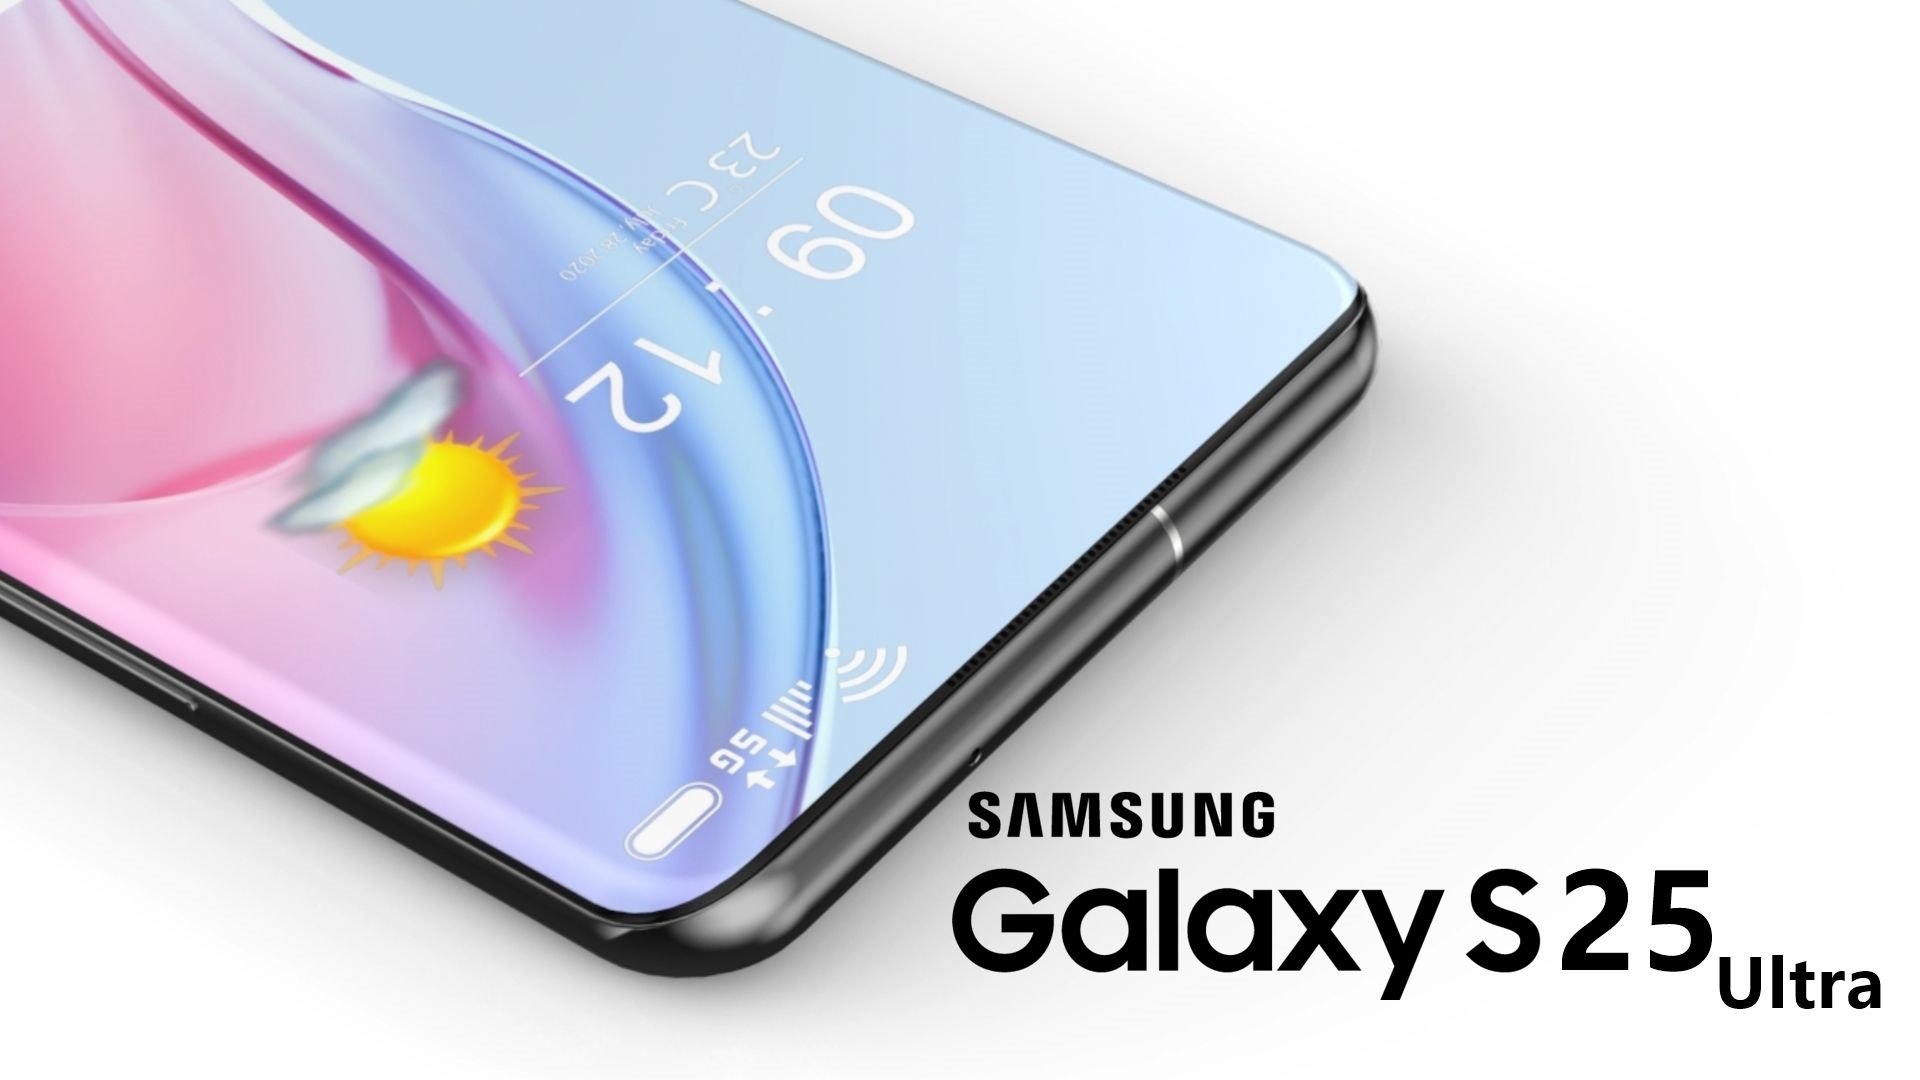 Samsung GALAXY S25 Anuntate Schimbari IMPRESIONANTE Surprinde Fanii Samsung